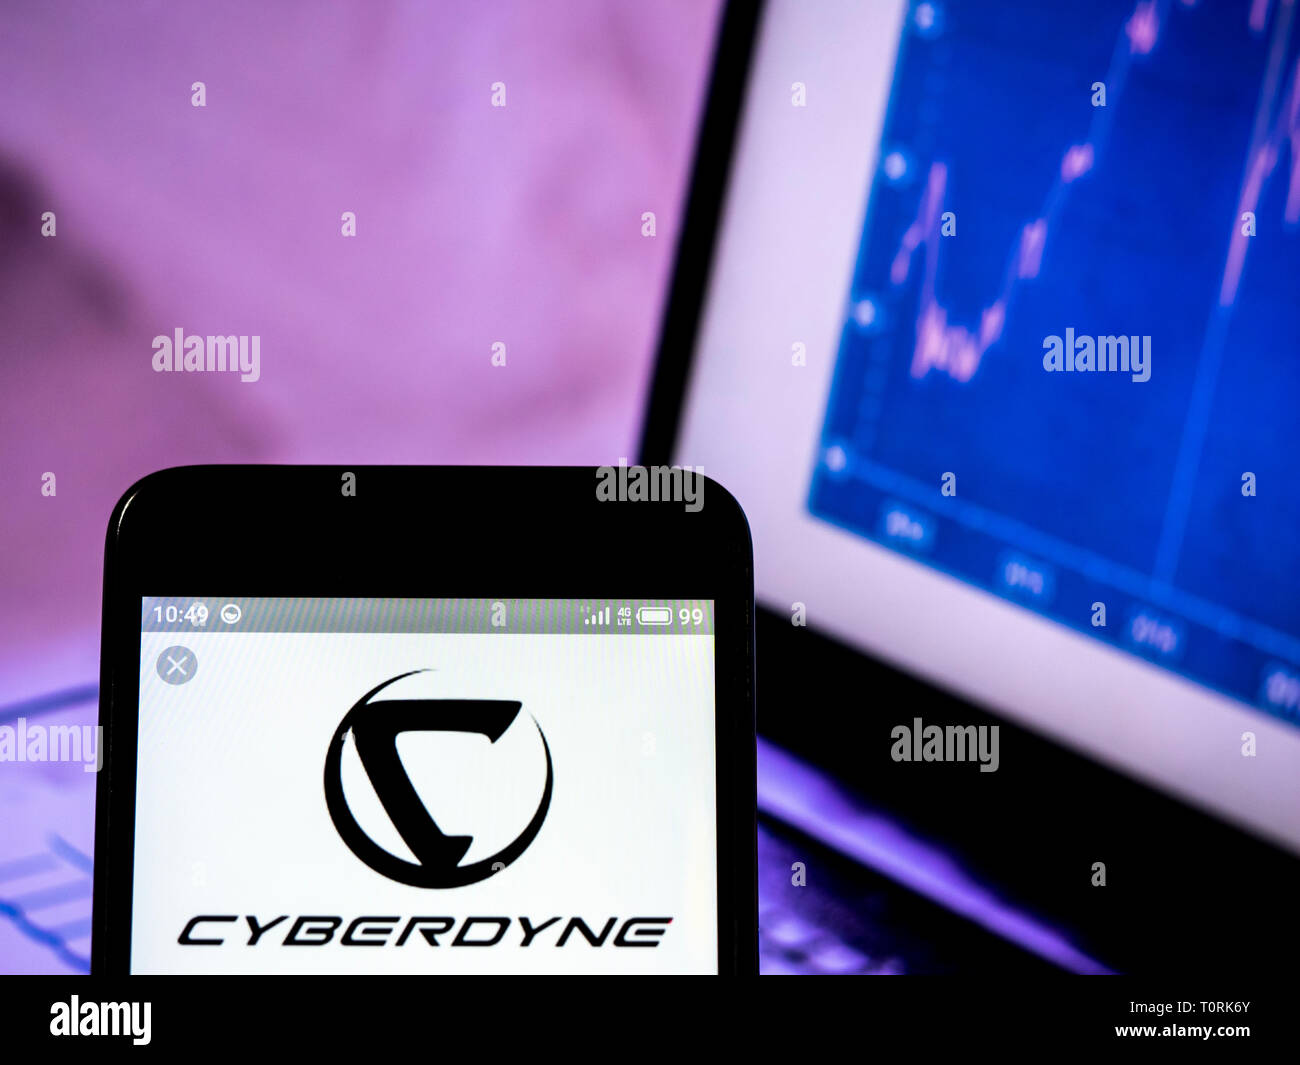 Cyberdyne Inc. logo seen displayed on smart phone. Stock Photo